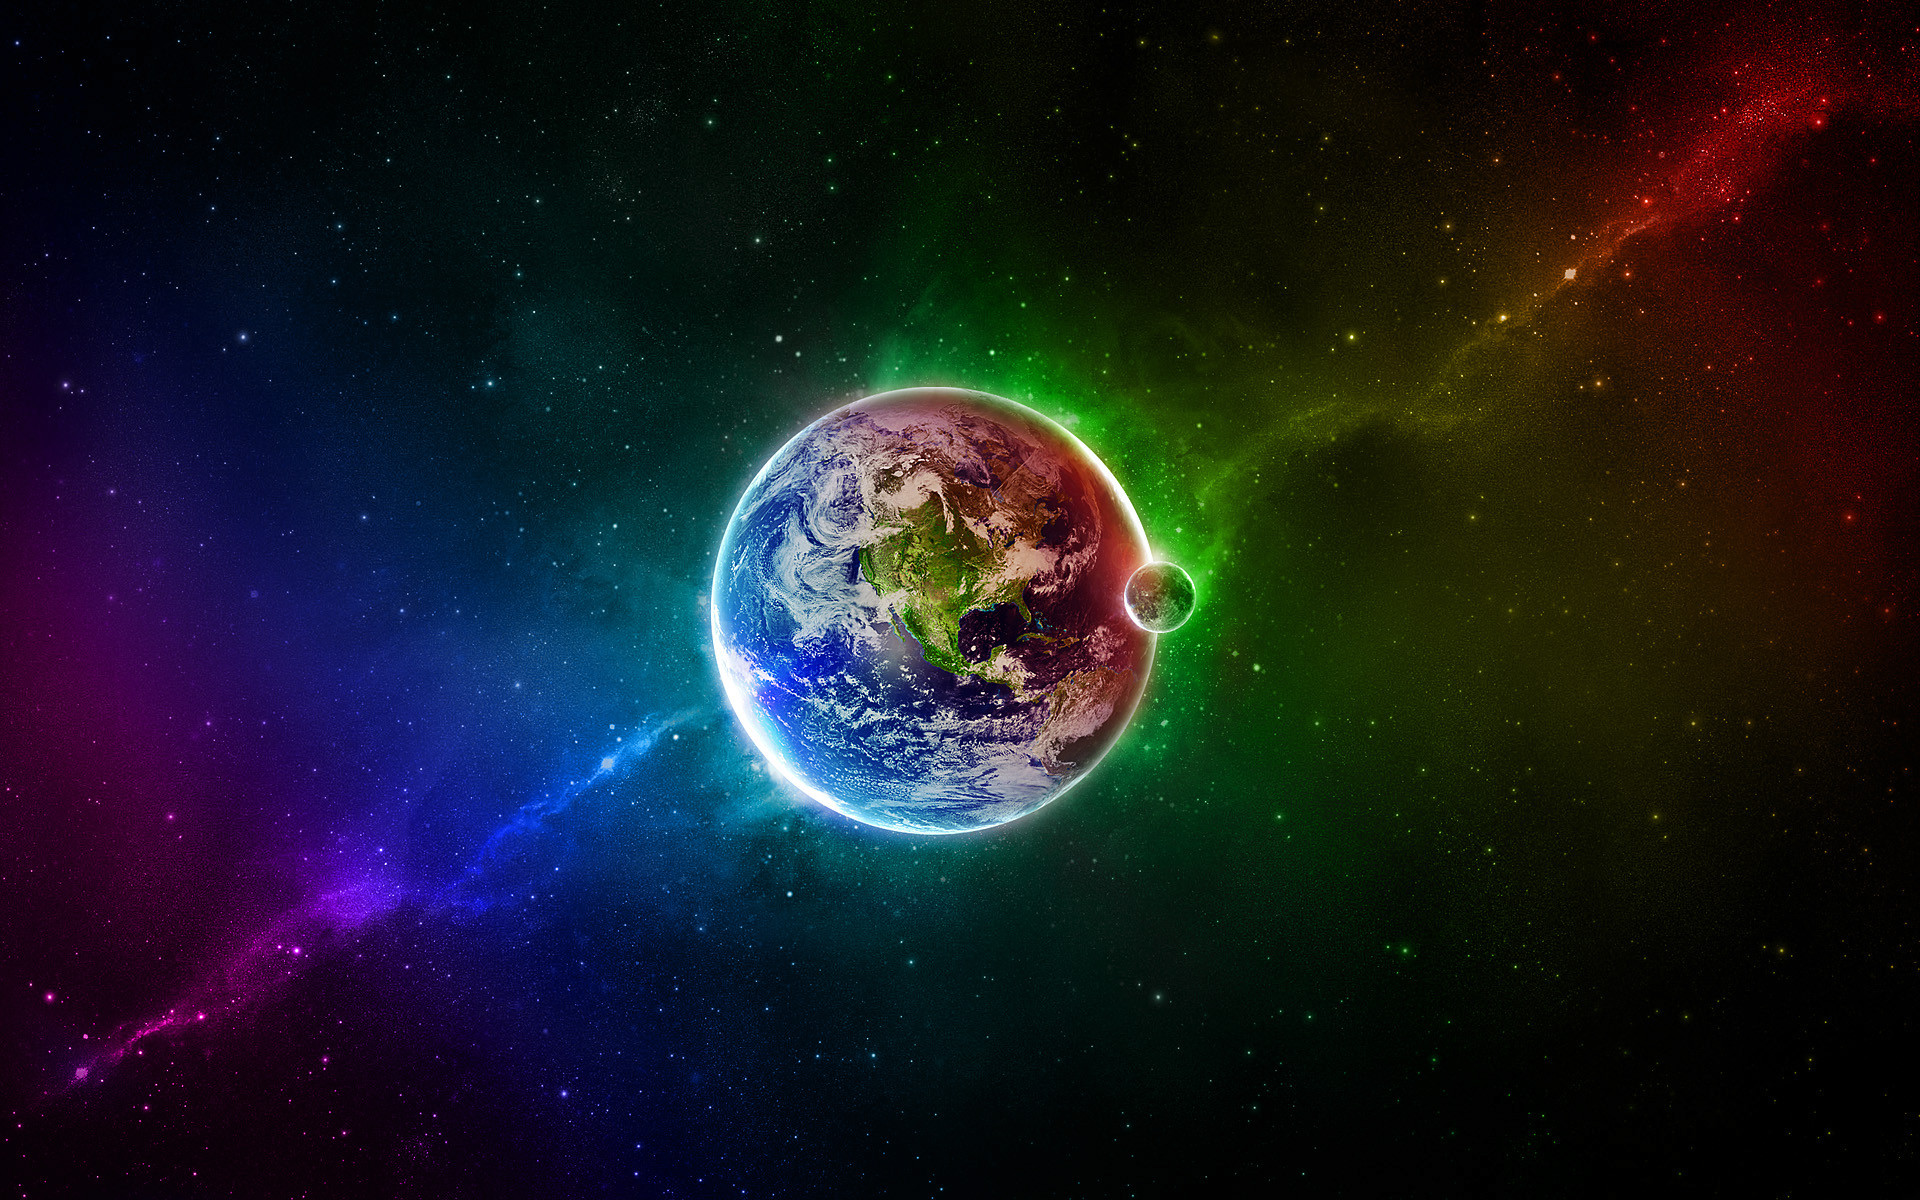 Colorful Digital Art Earth Wallpaper Id